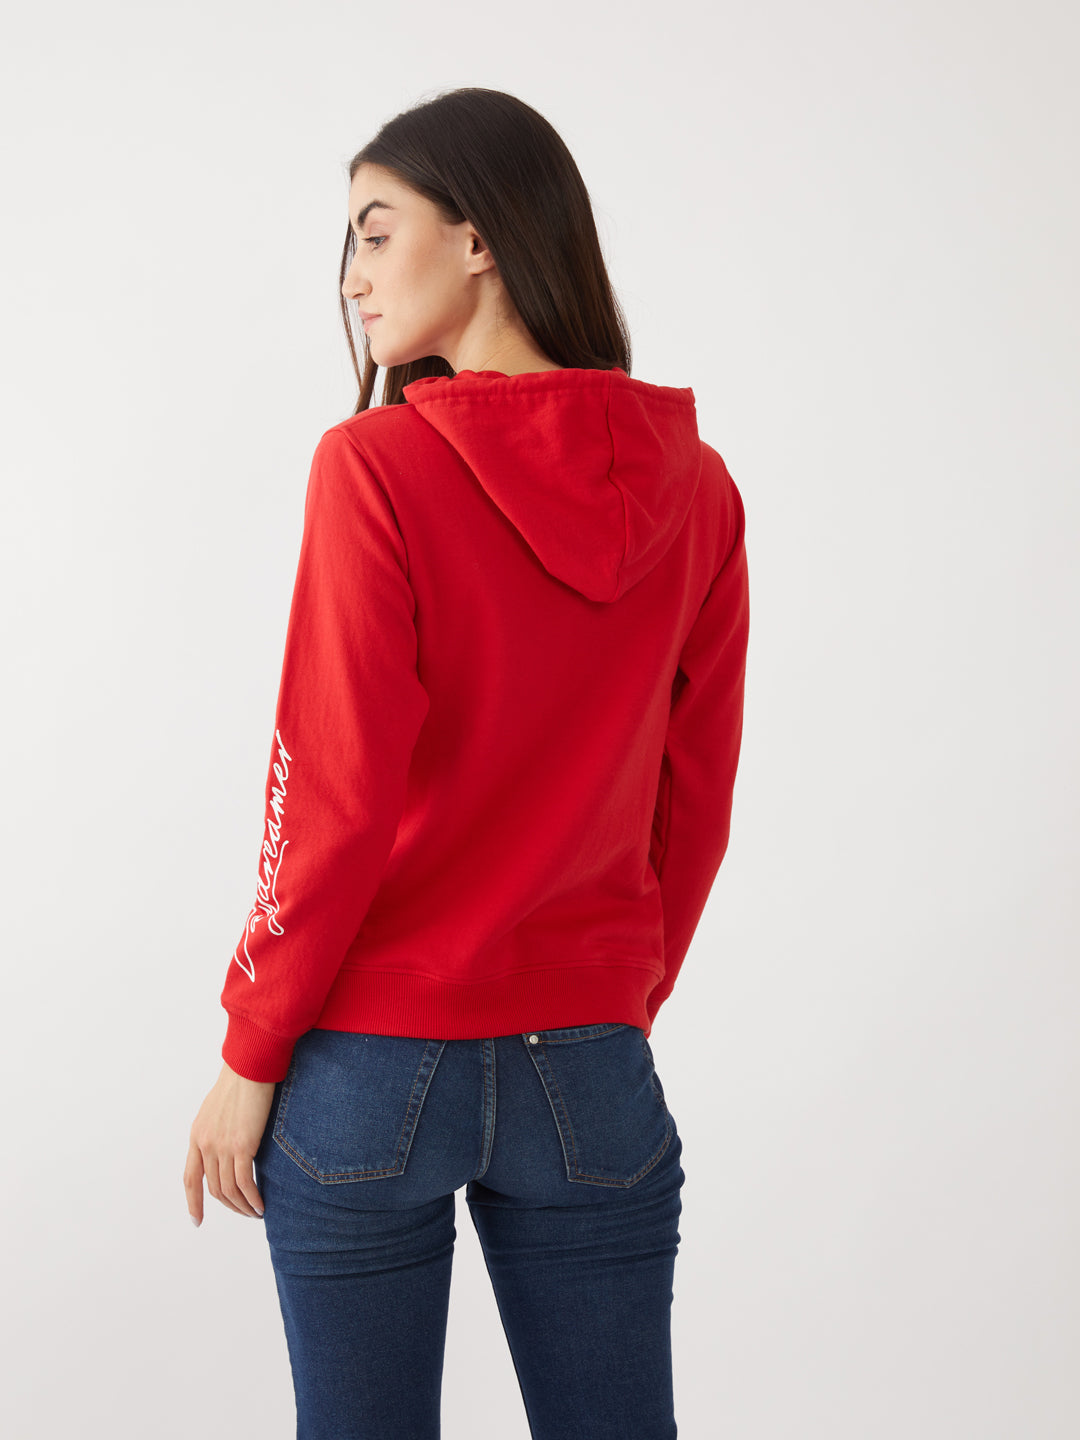 Red Printed Sweatshirt For Women